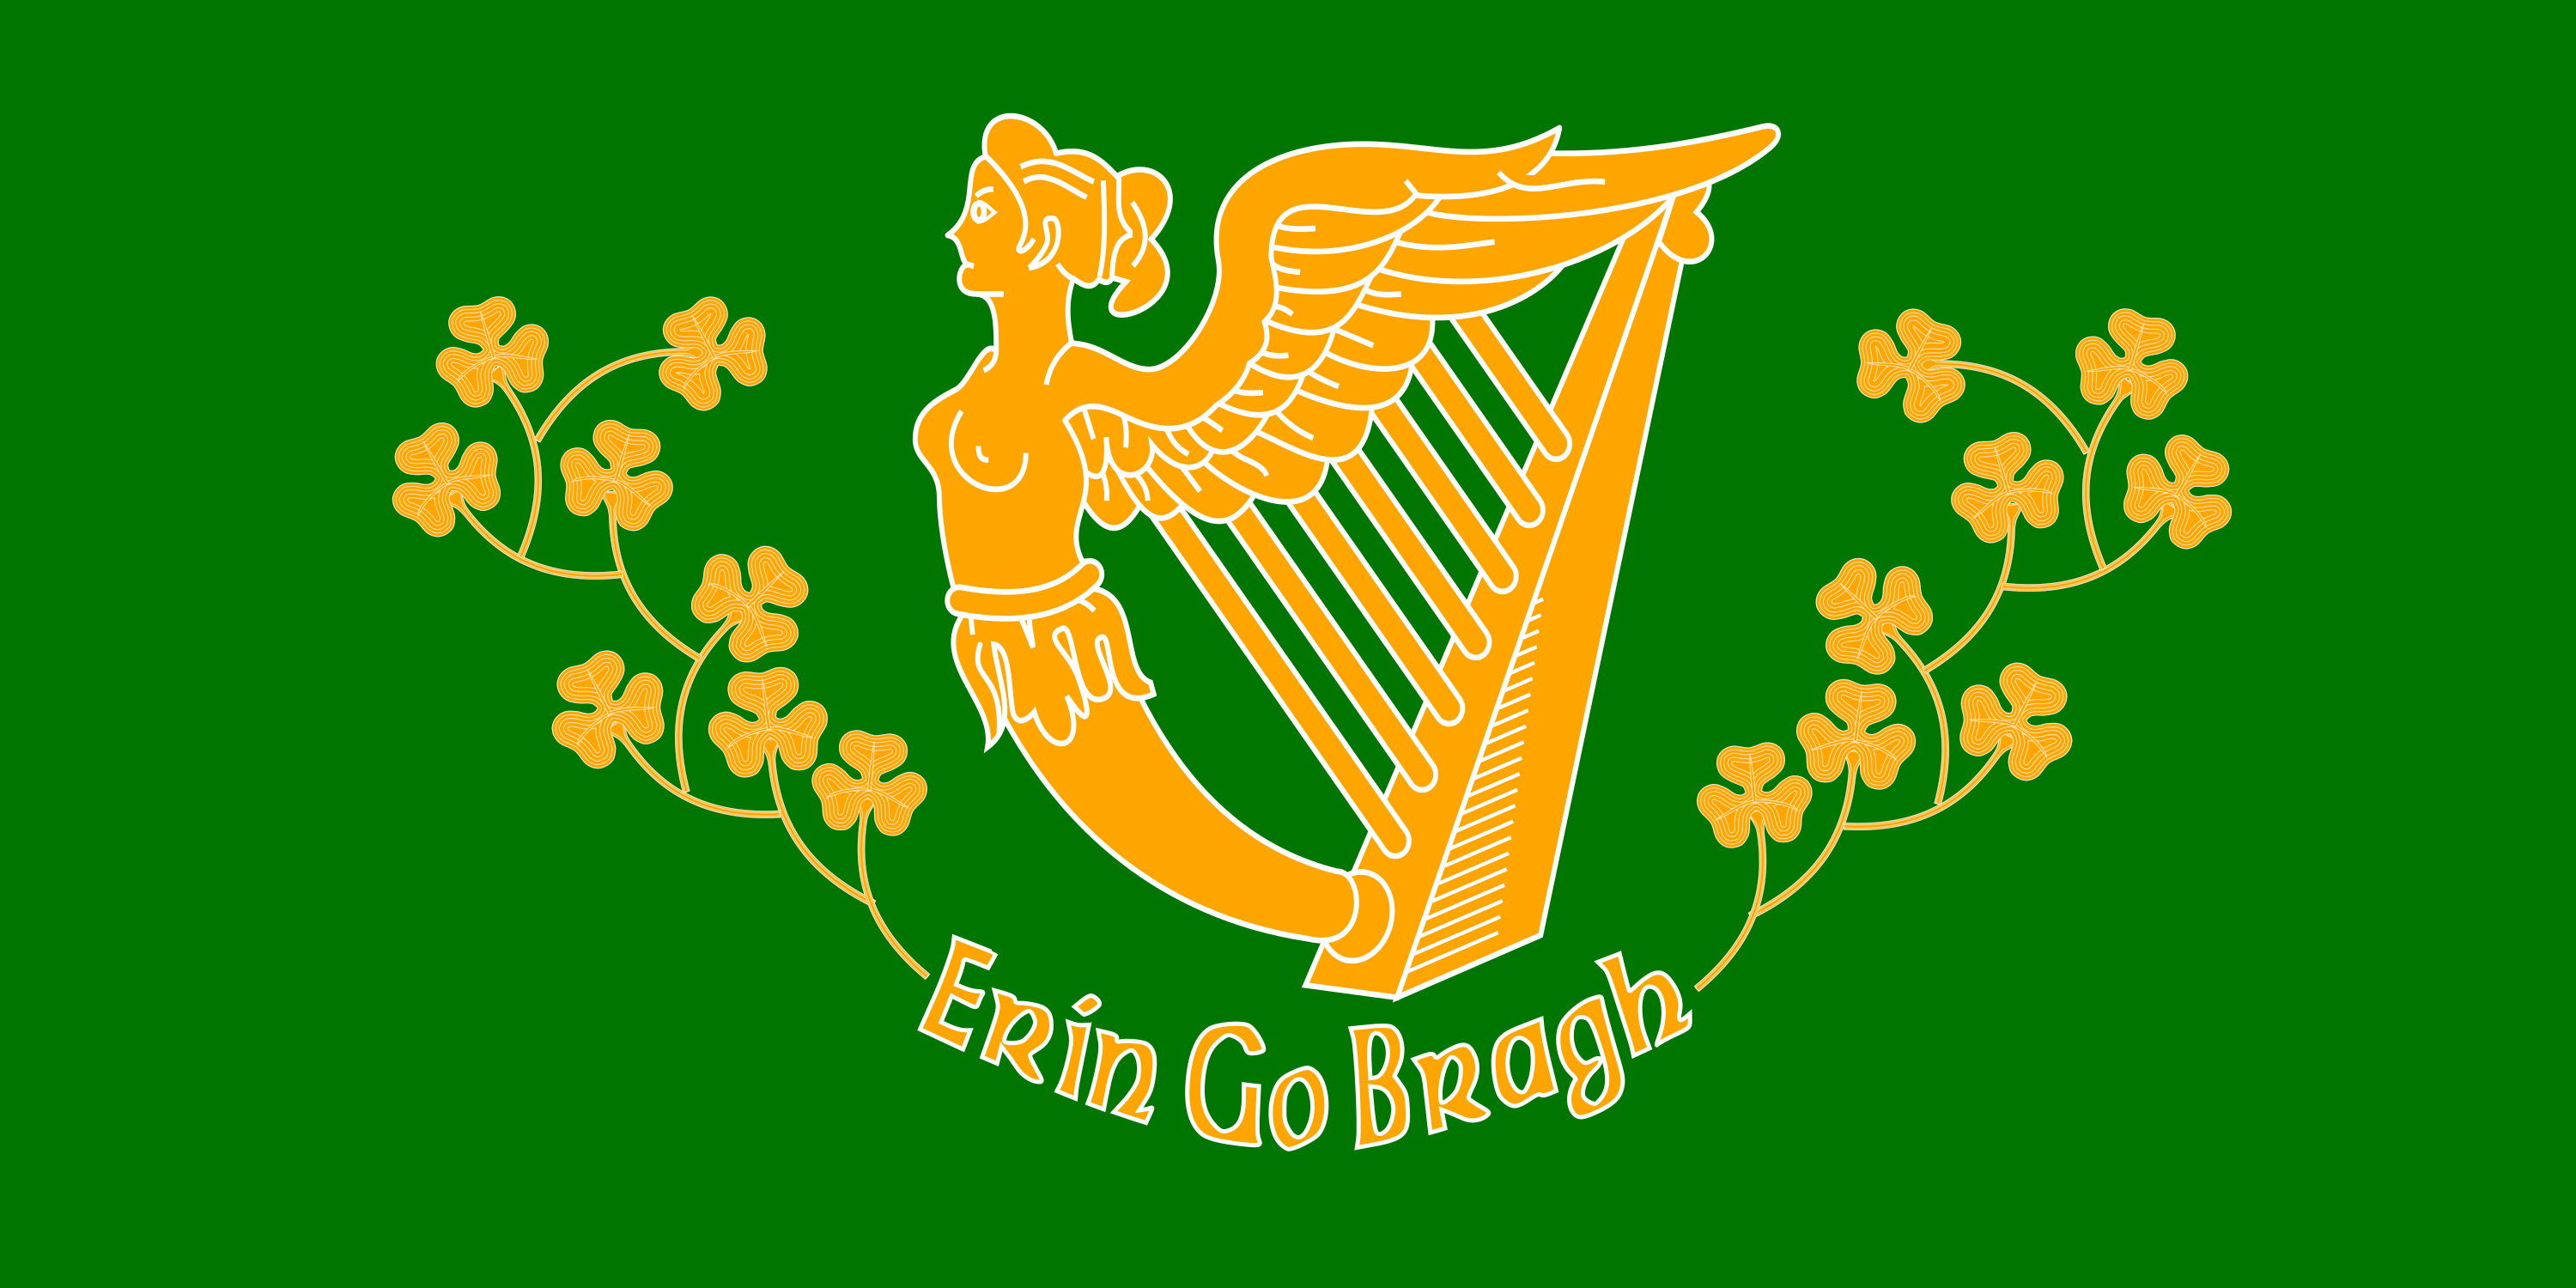 240cm X 150cm Erin Go Bragh Irland Riesige 8ft X 5ft Fahne Banner 